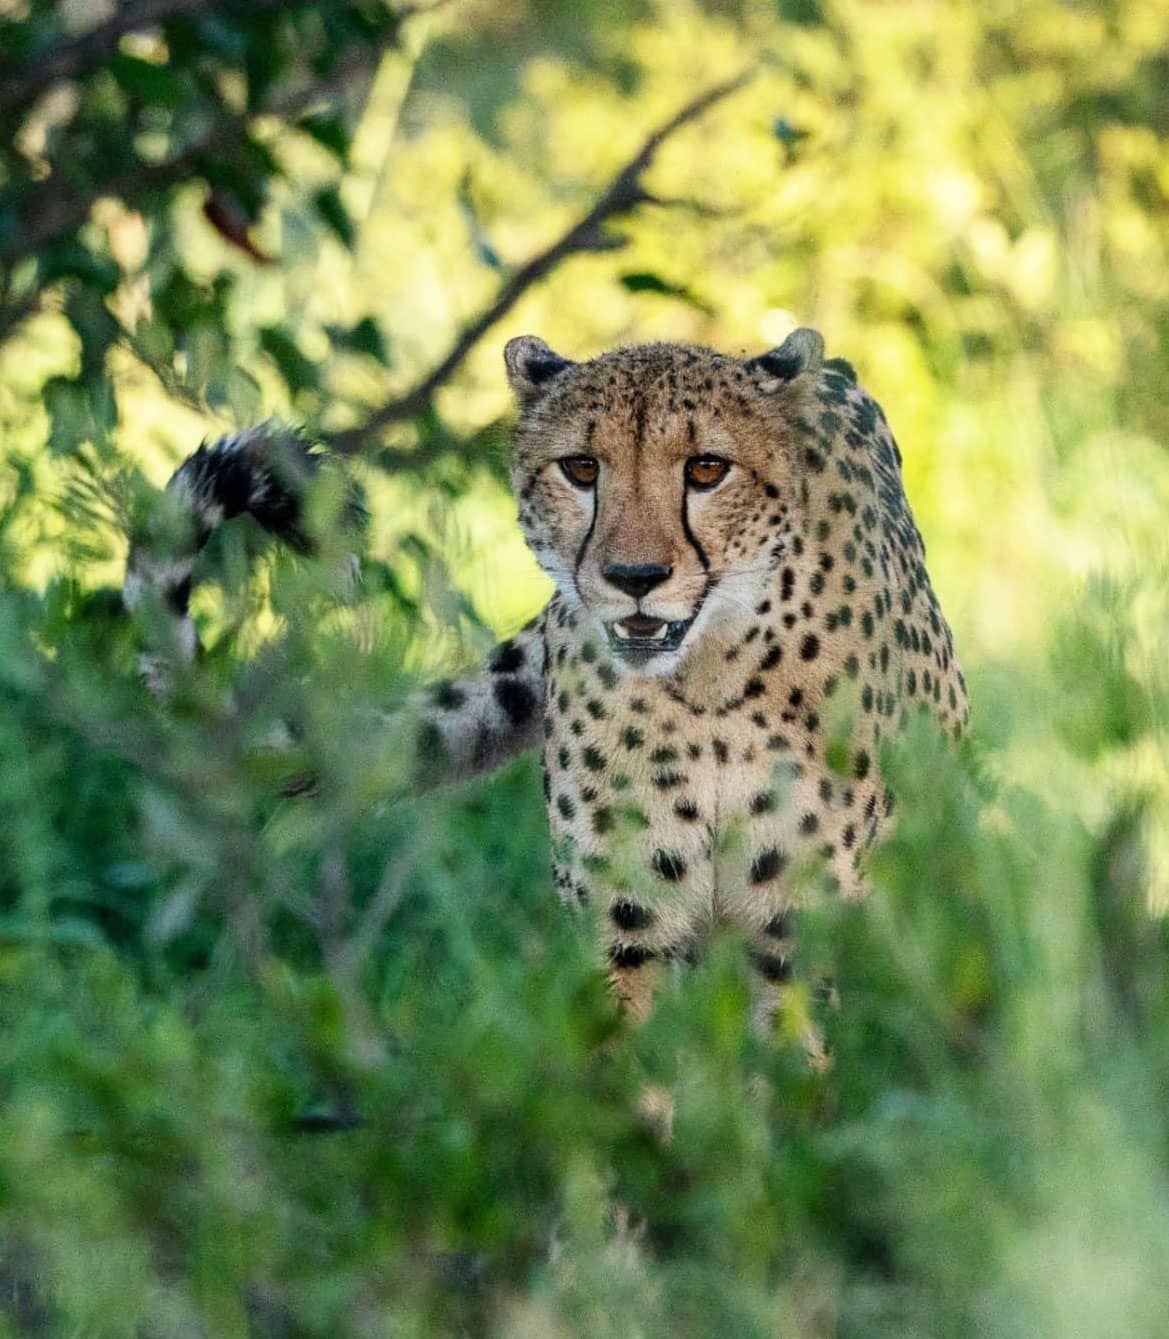 cheetah peering through the bushes in moremi Game Reserve